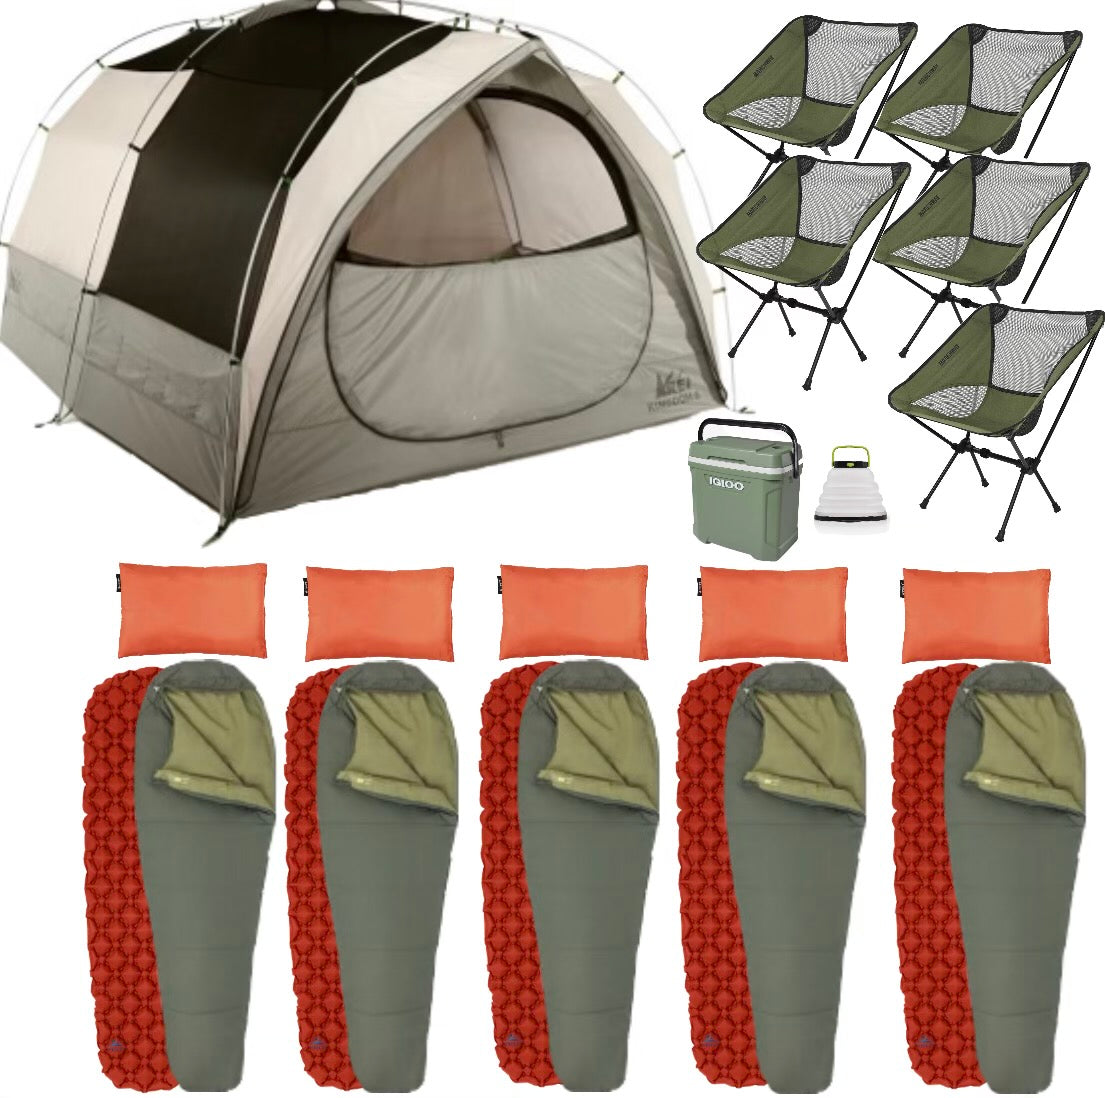 Rental Camping Equipment, Rent Tent